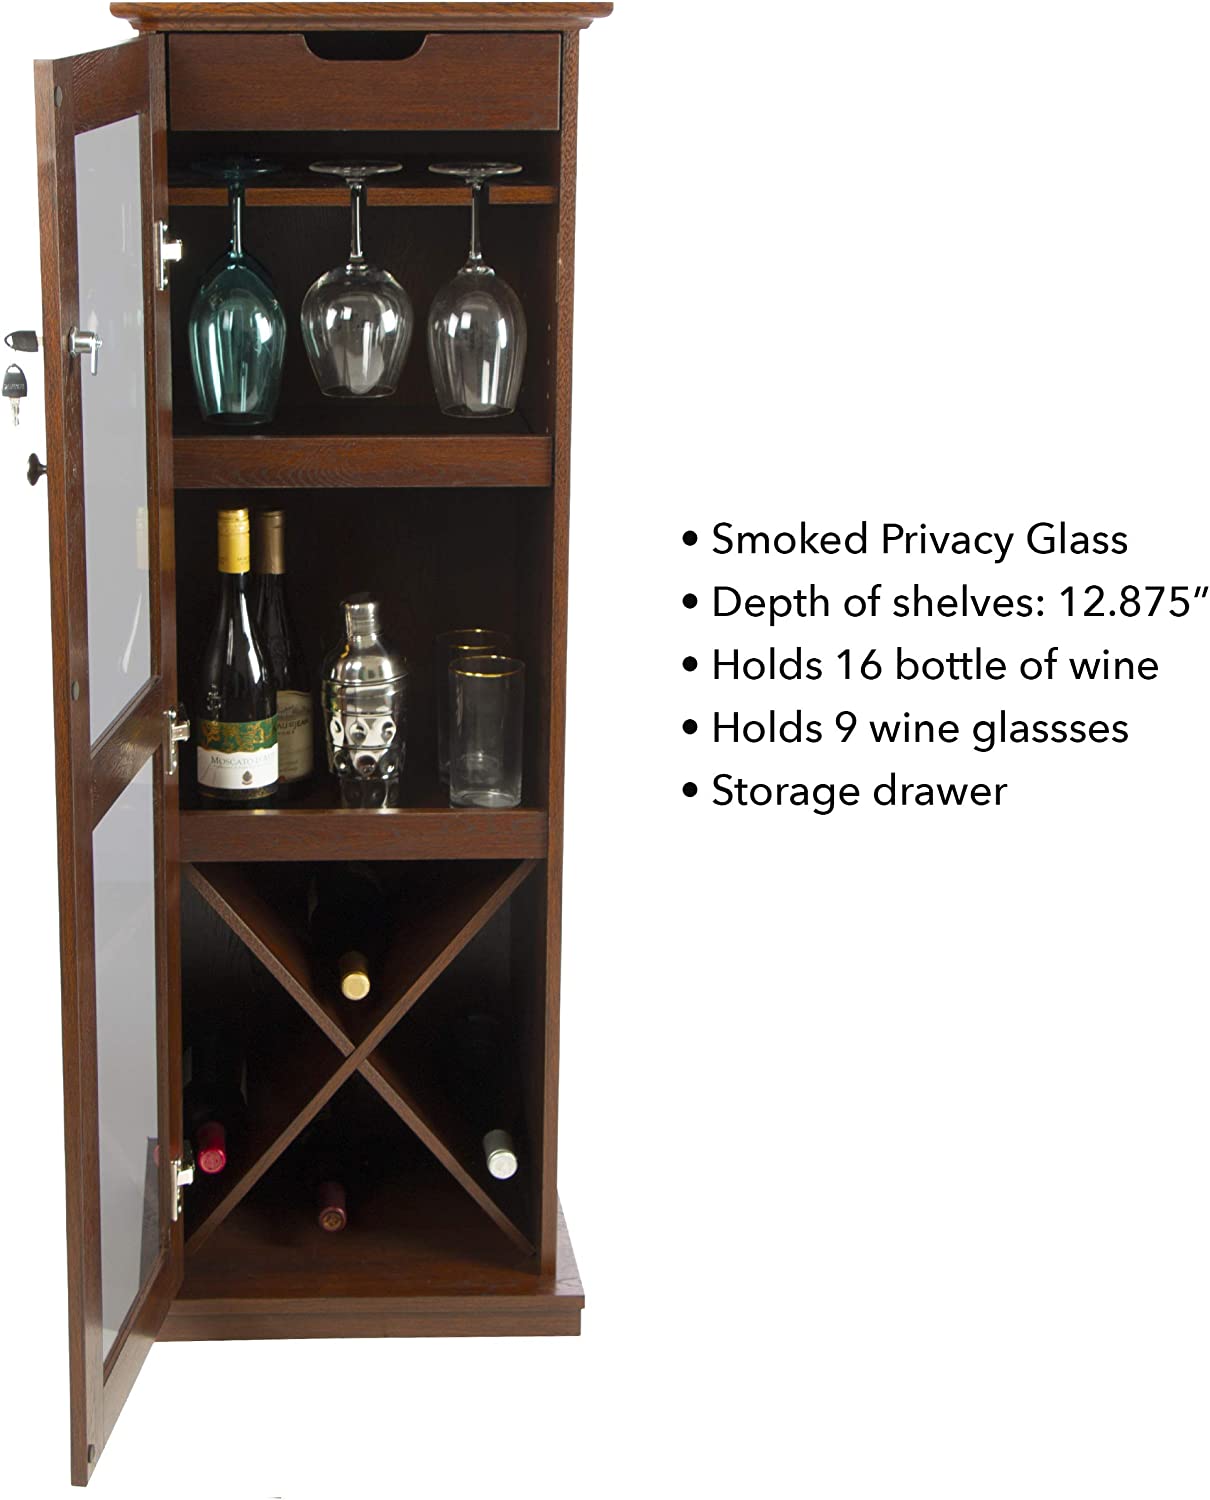 European Hidden Hinges, Storage for Wine Glasses & Bottles of Wine-$85